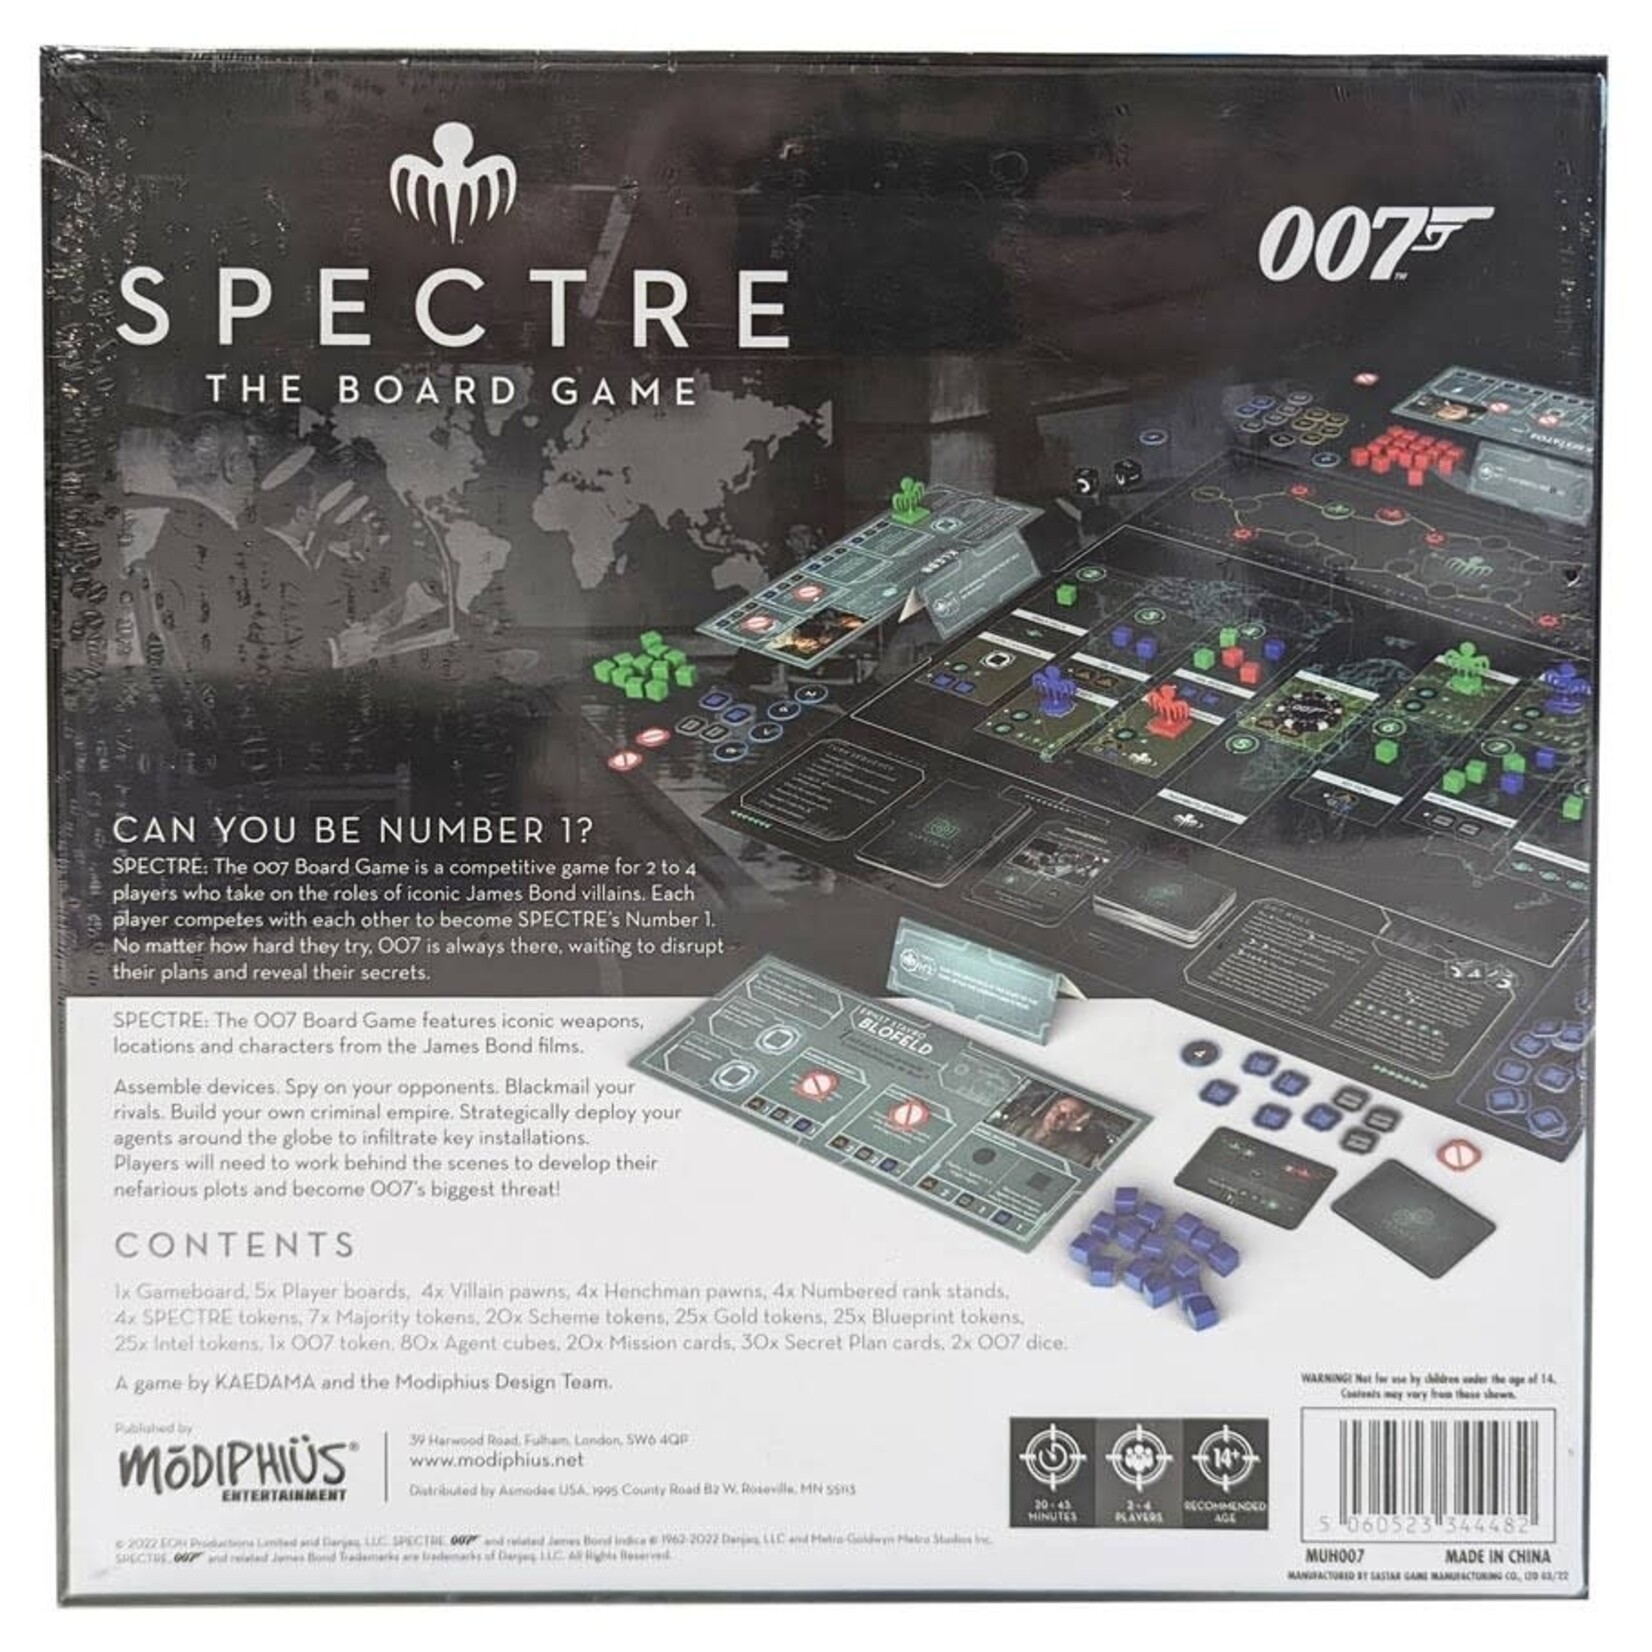 Modiphius Entertainment 007 SPECTRE Board Game